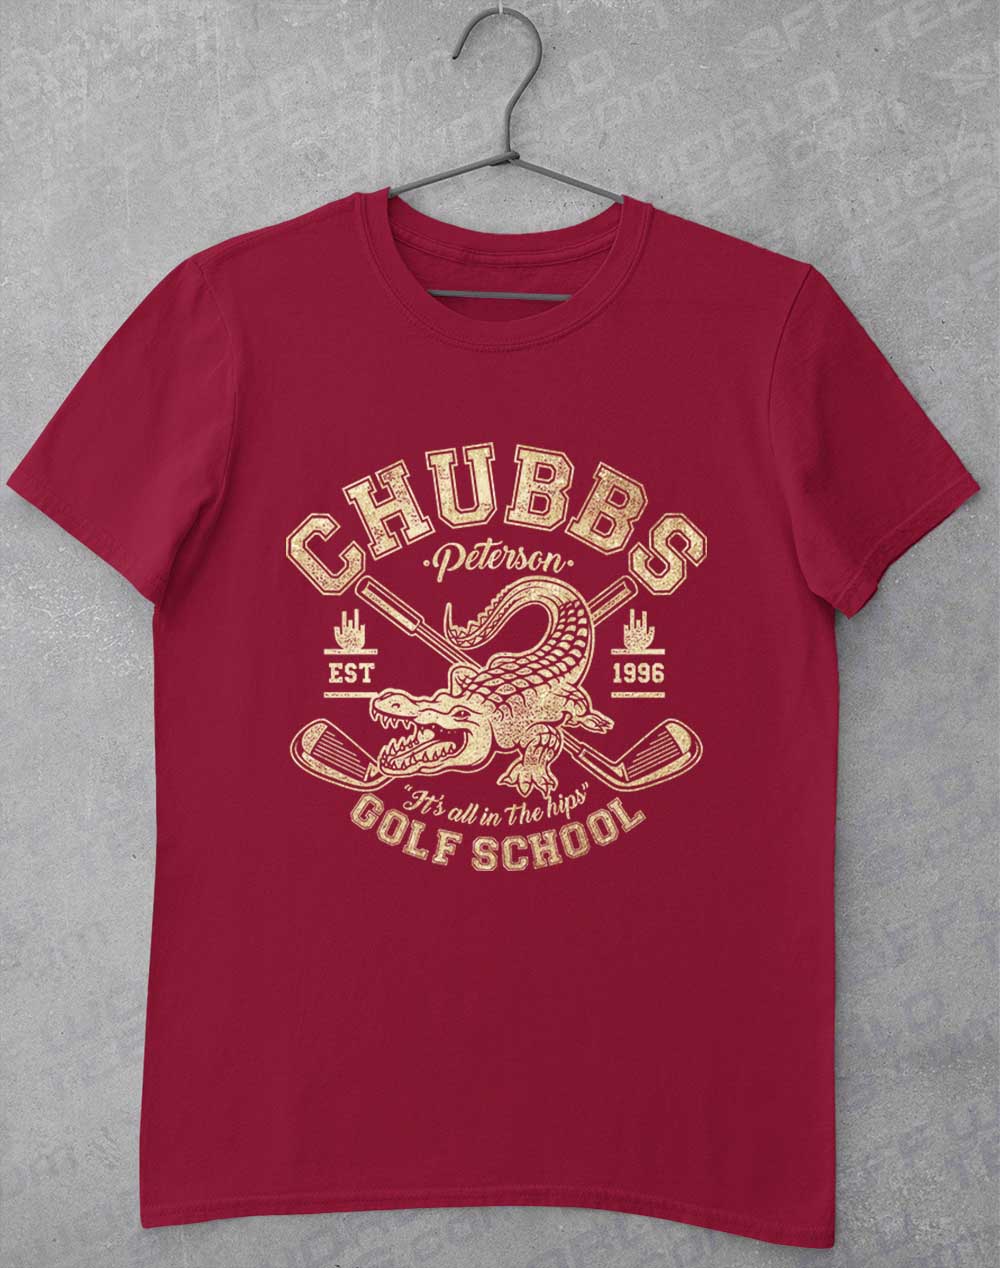 Cardinal Red - Chubb's Golf School 1996 T-Shirt